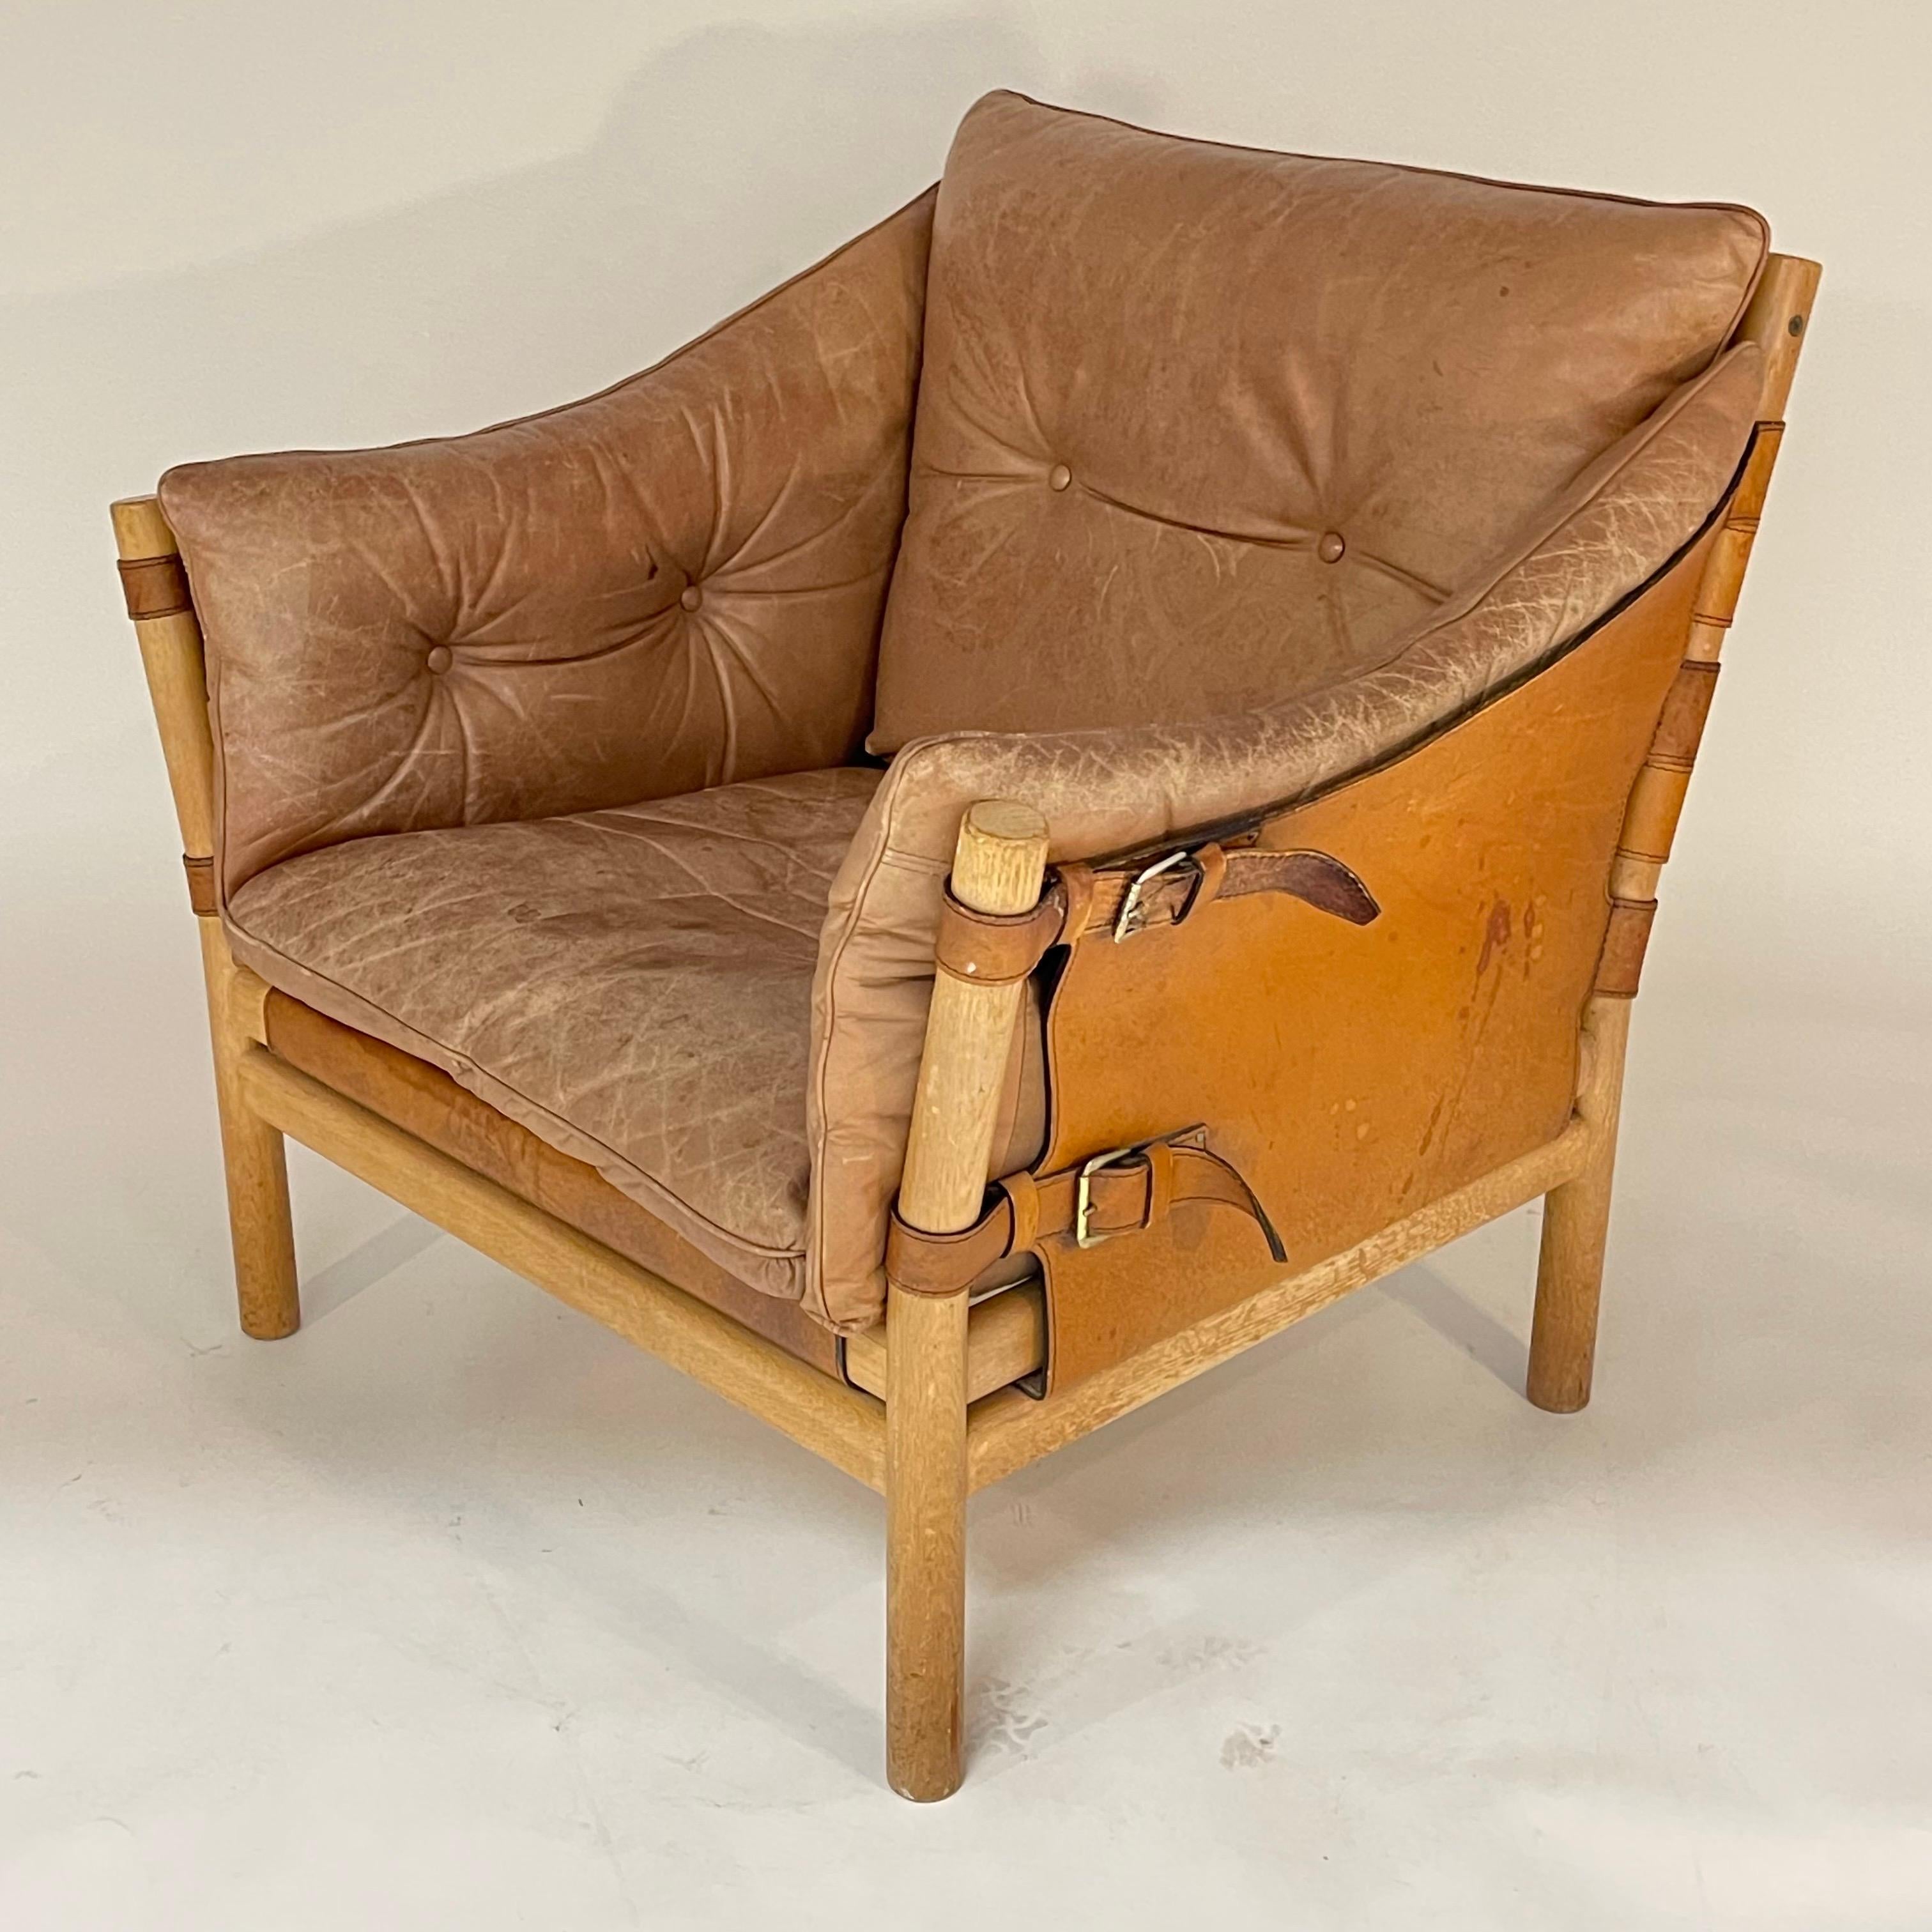 Arne Norell Ilona Oak and Cognac Leather Campaign Safari Chair, Sweden, 1970s For Sale 1